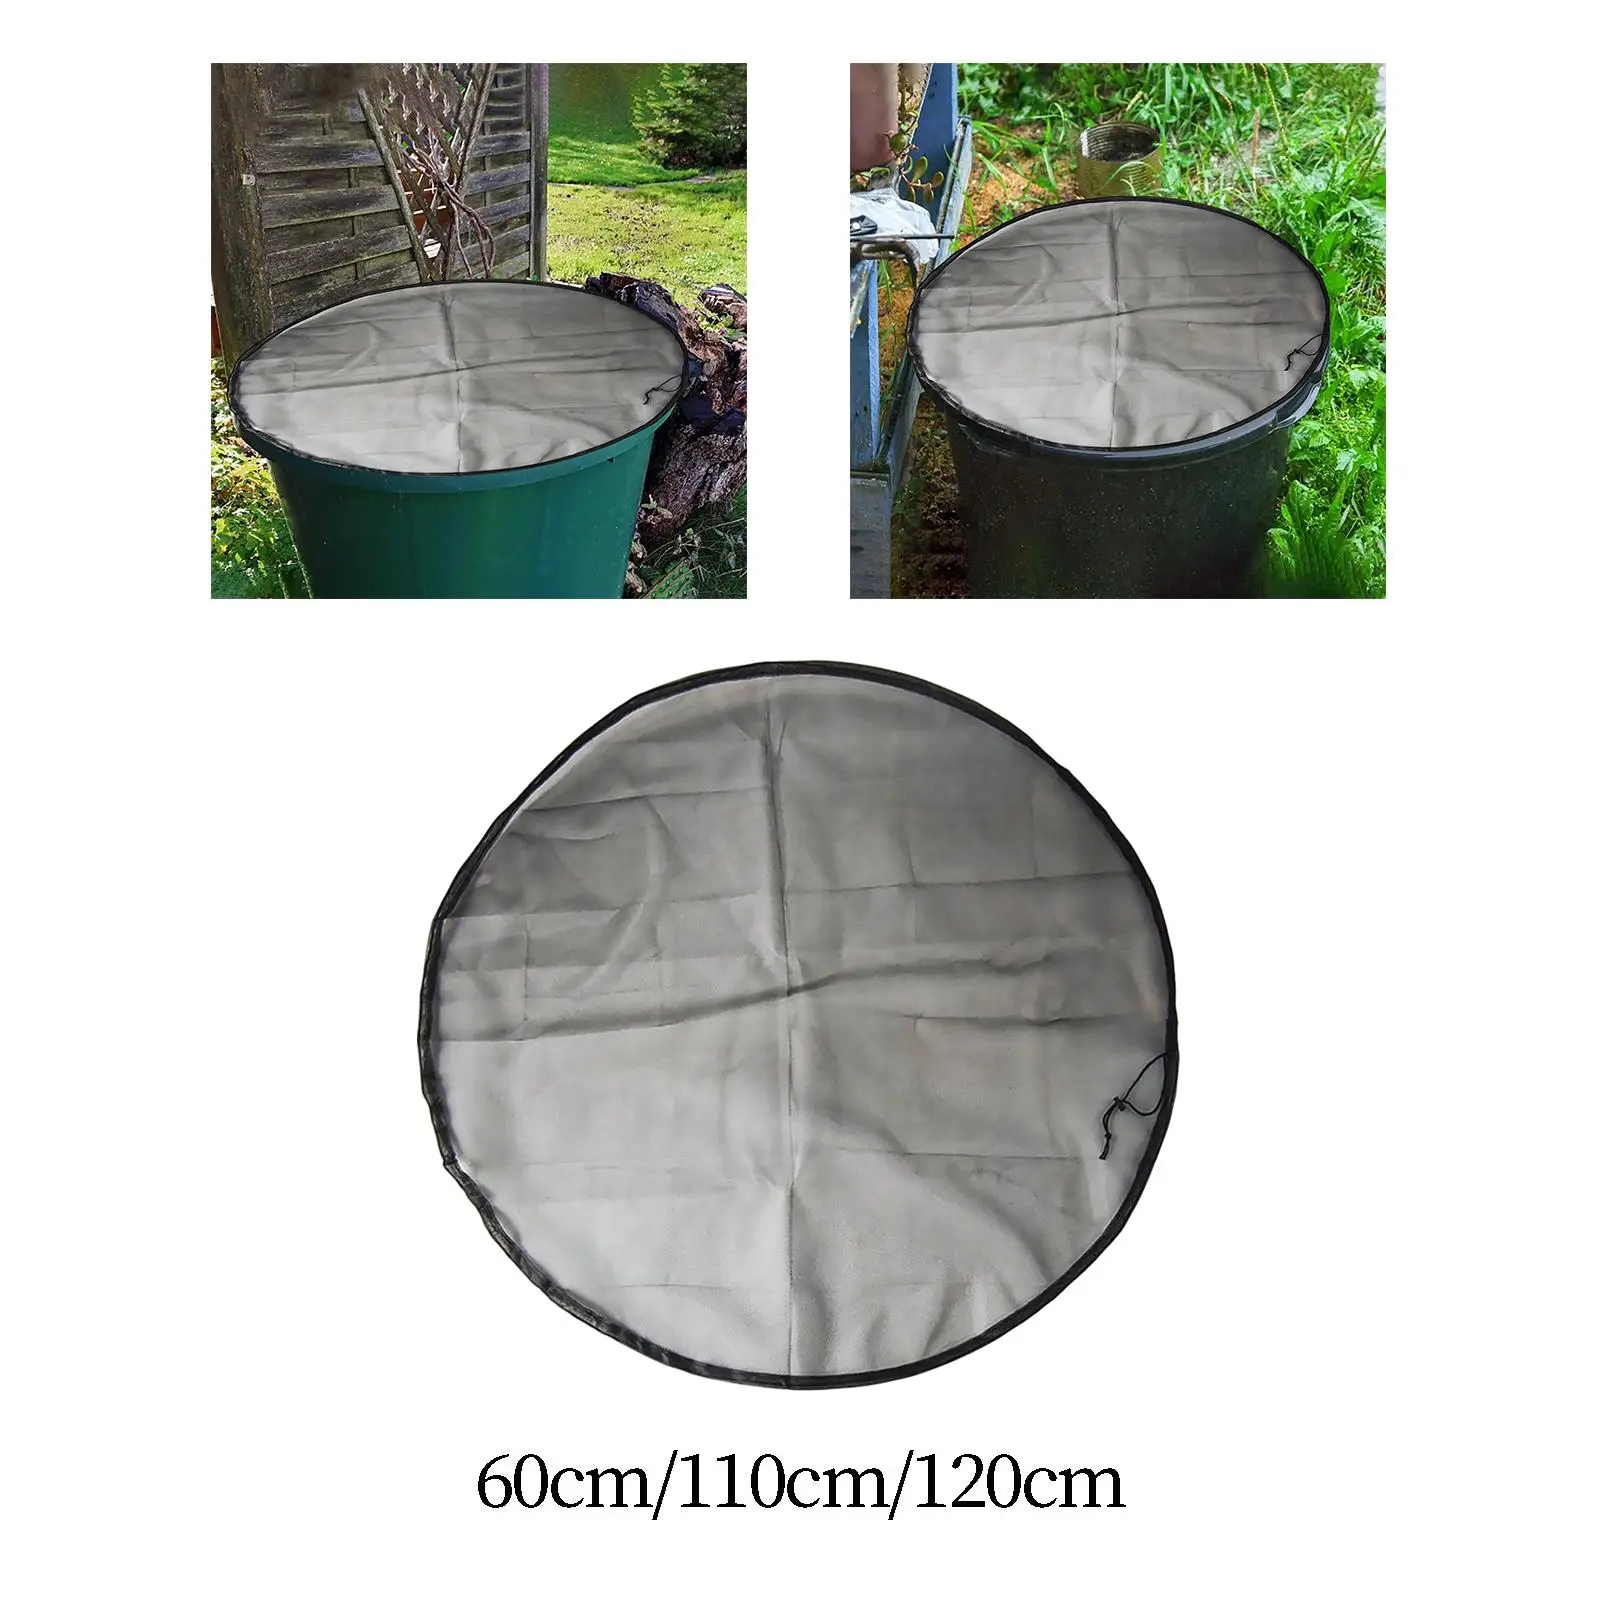 Mesh Cover for Rain Barrel, Rain Barrel Netting Screen Water Barrel Net Cover for Prevent Fallen Leaves Small Items Debris Out